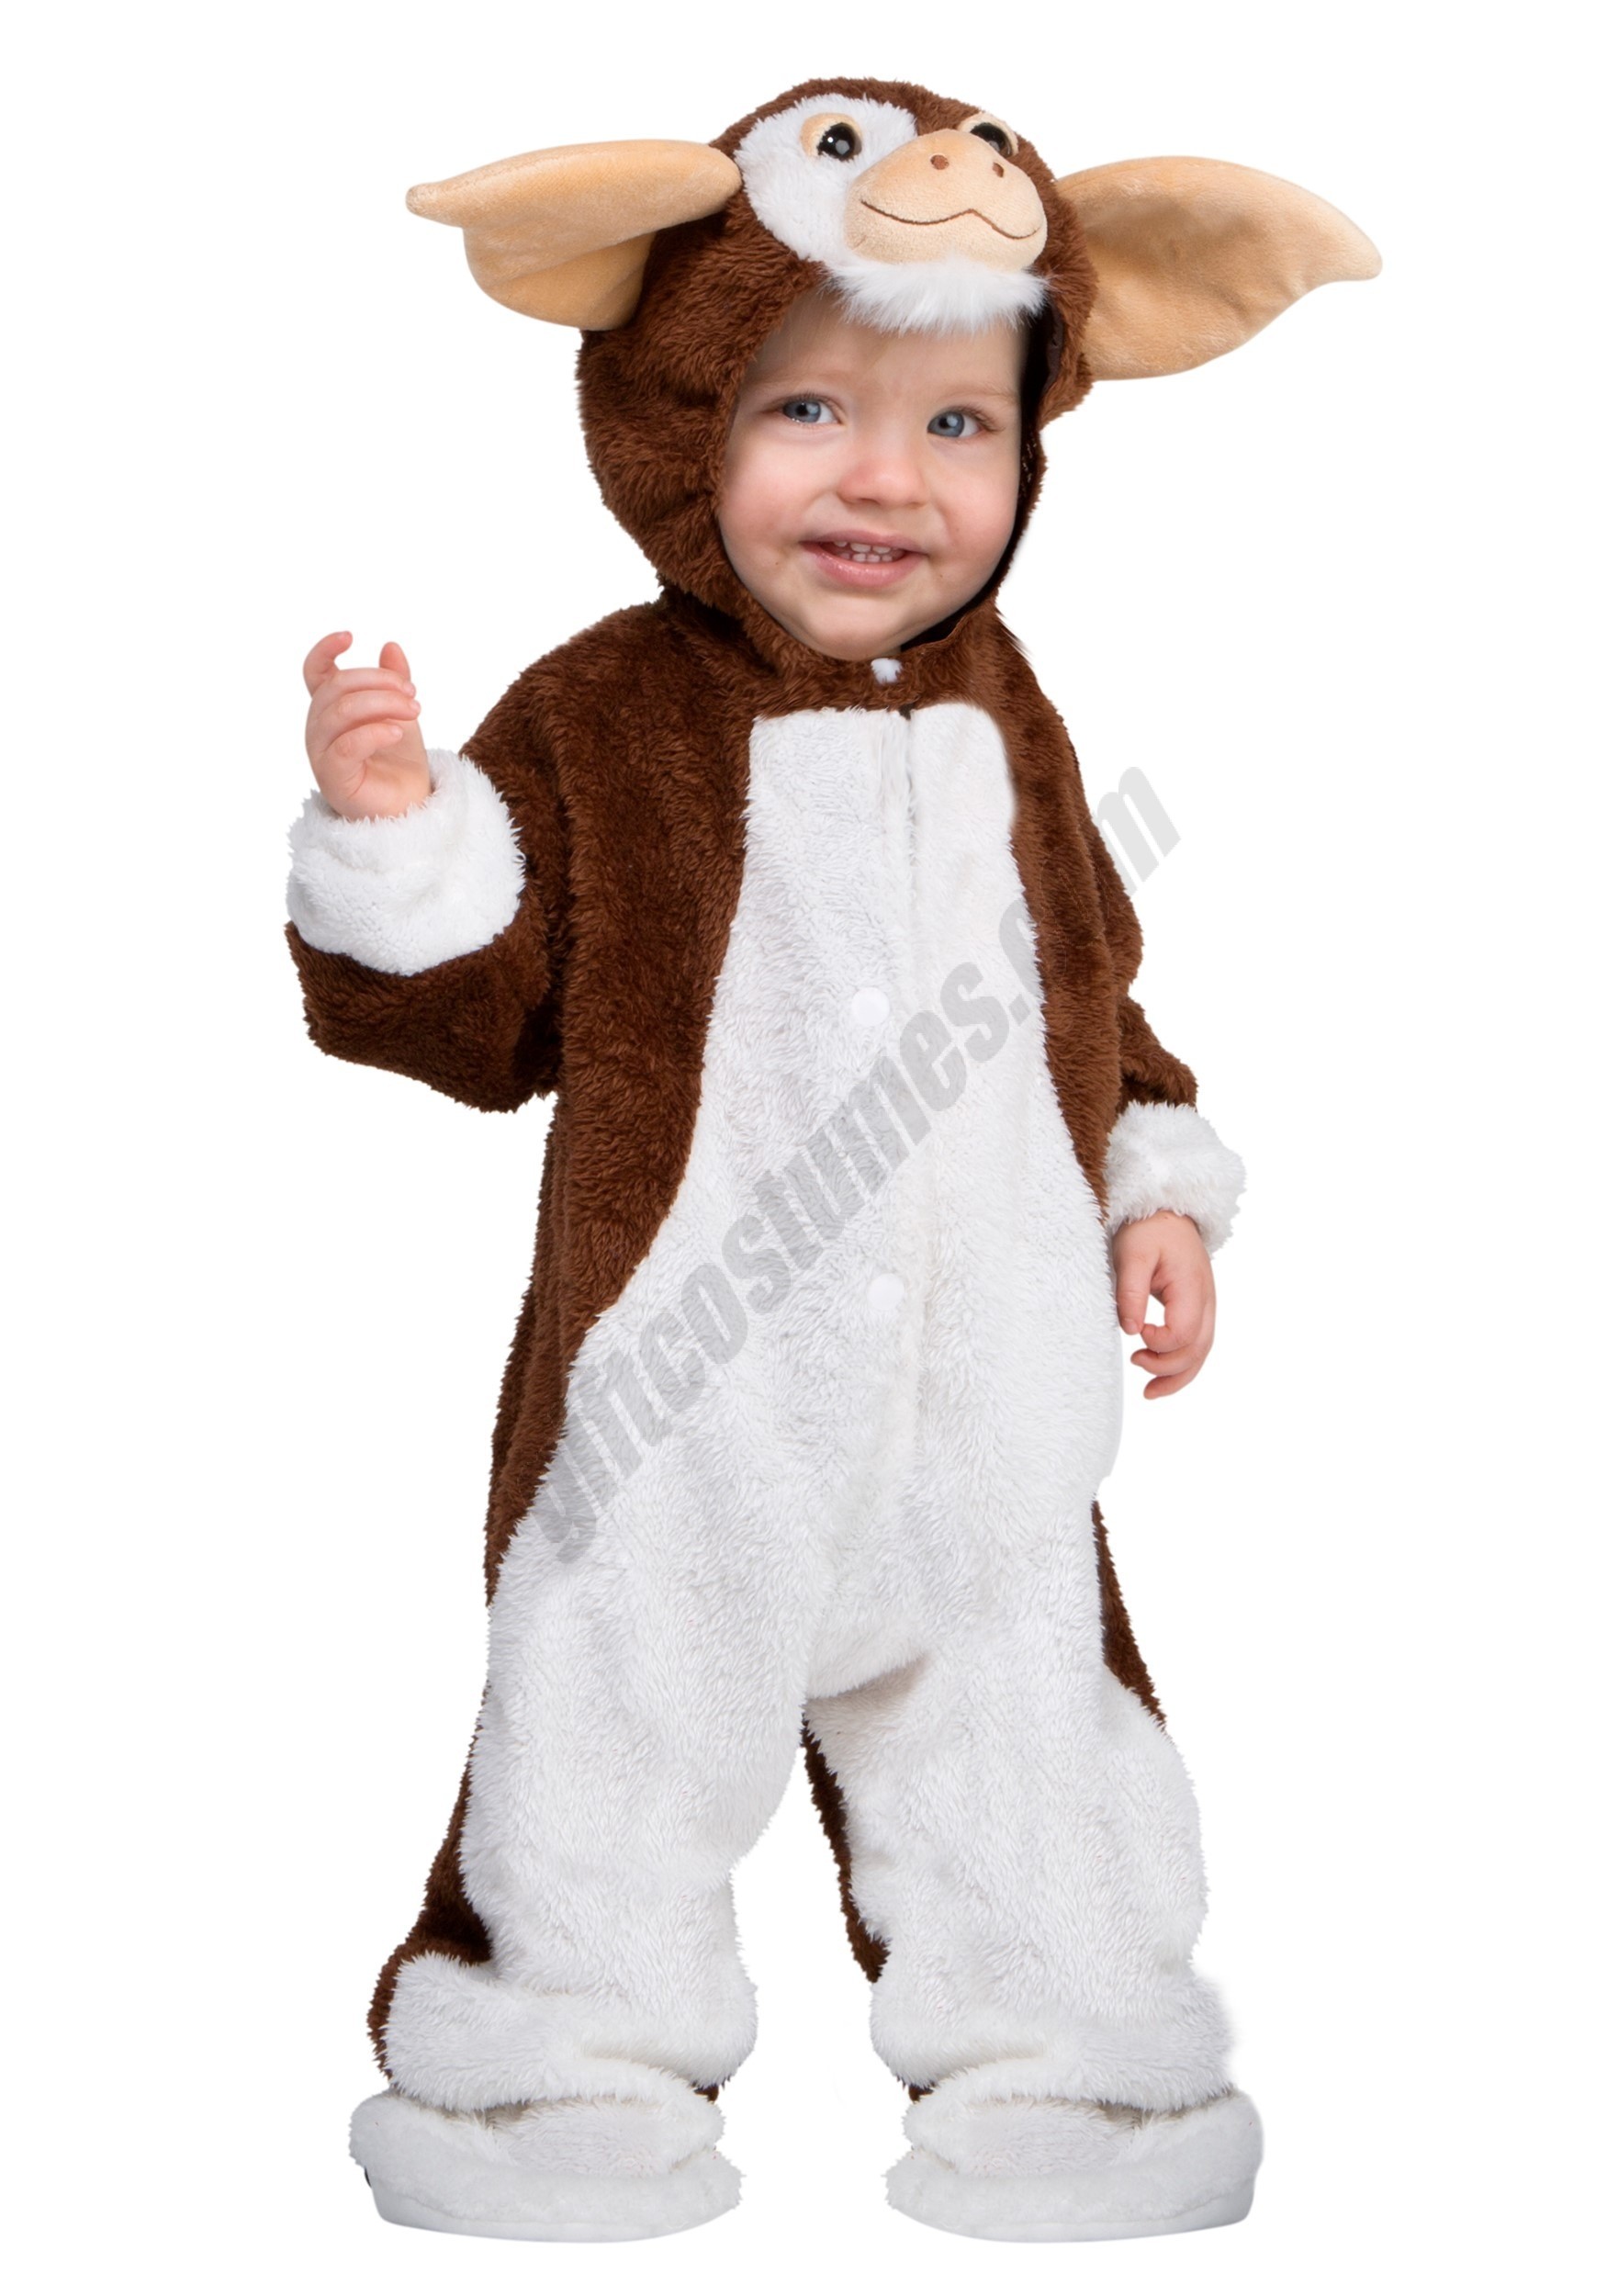 Infant/Toddler Mischief Maker Costume Promotions - Infant/Toddler Mischief Maker Costume Promotions